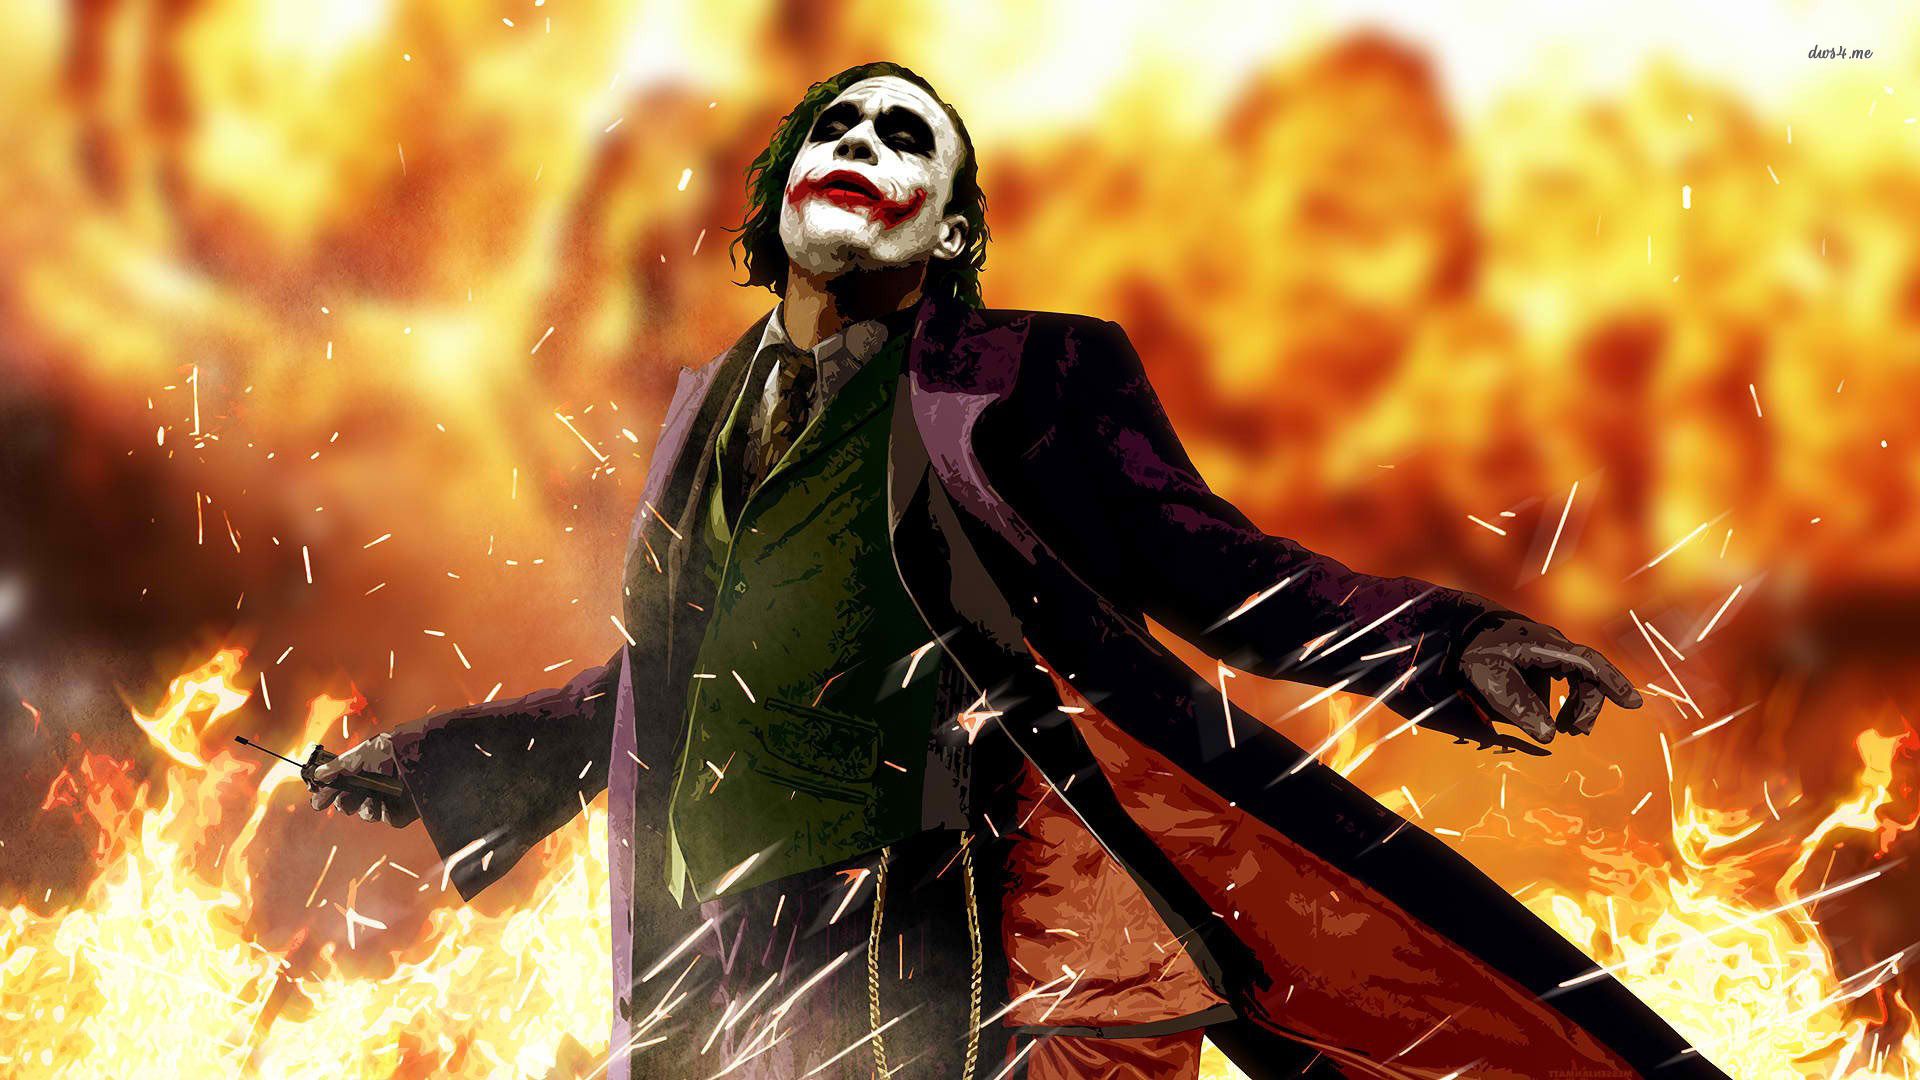 Joker The Dark Knight HD Wallpaper Movies Backgrounds